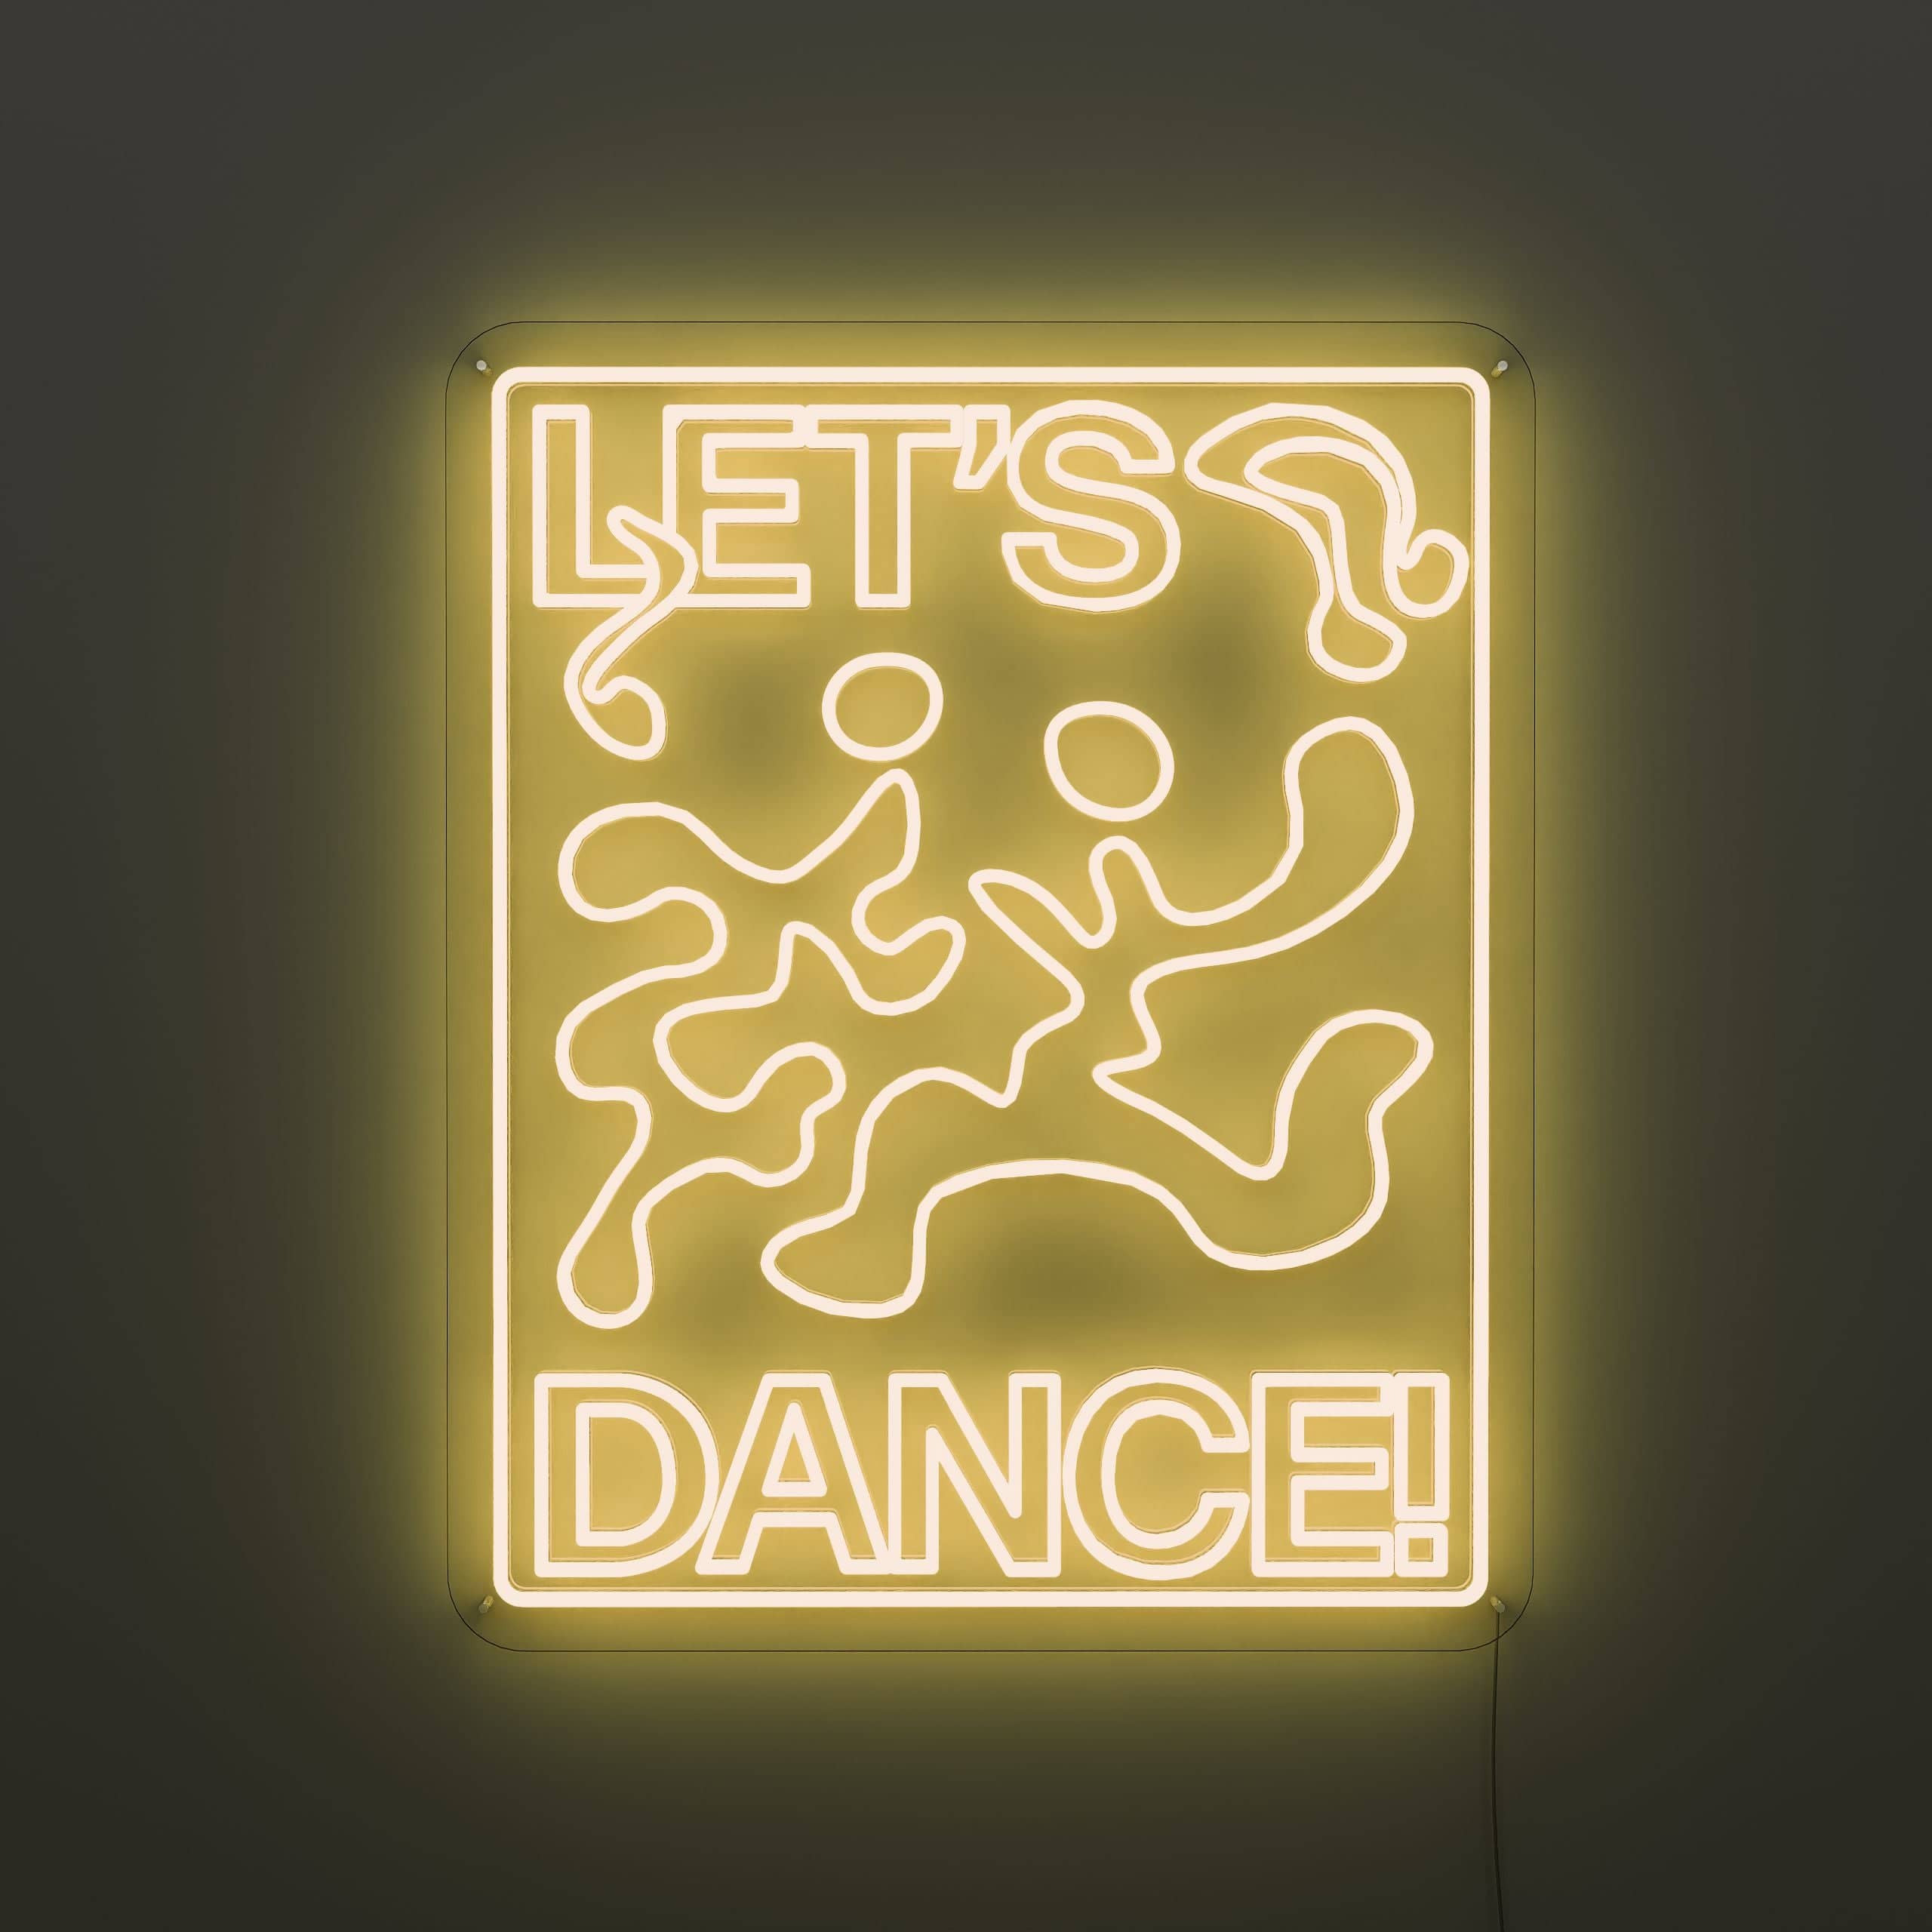 just-dance-tonight-neon-sign-lite